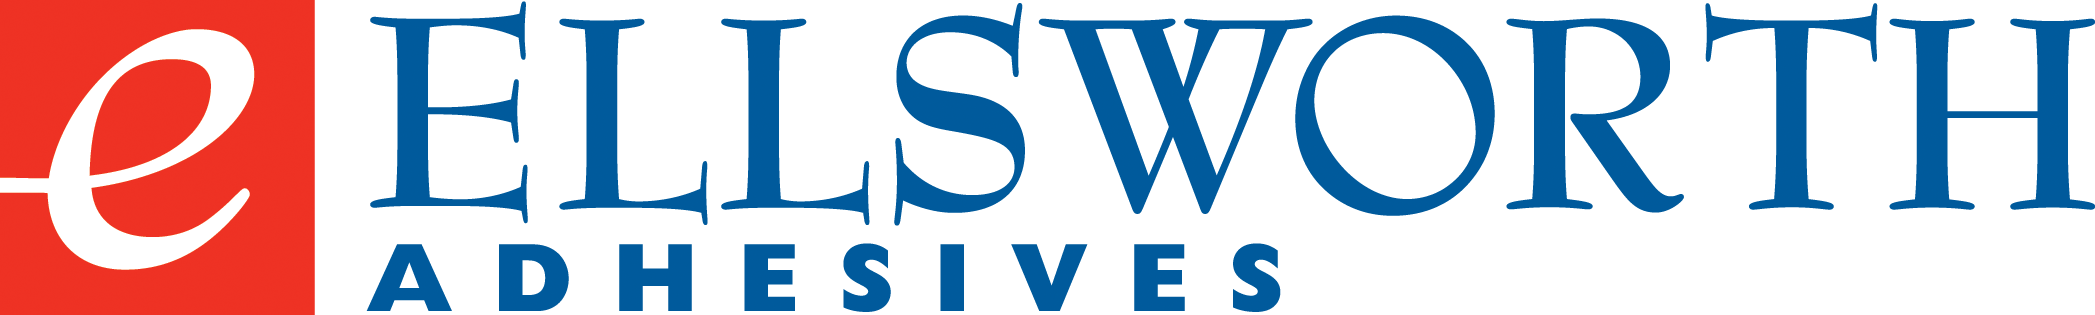 Ellsworth adhesives logo